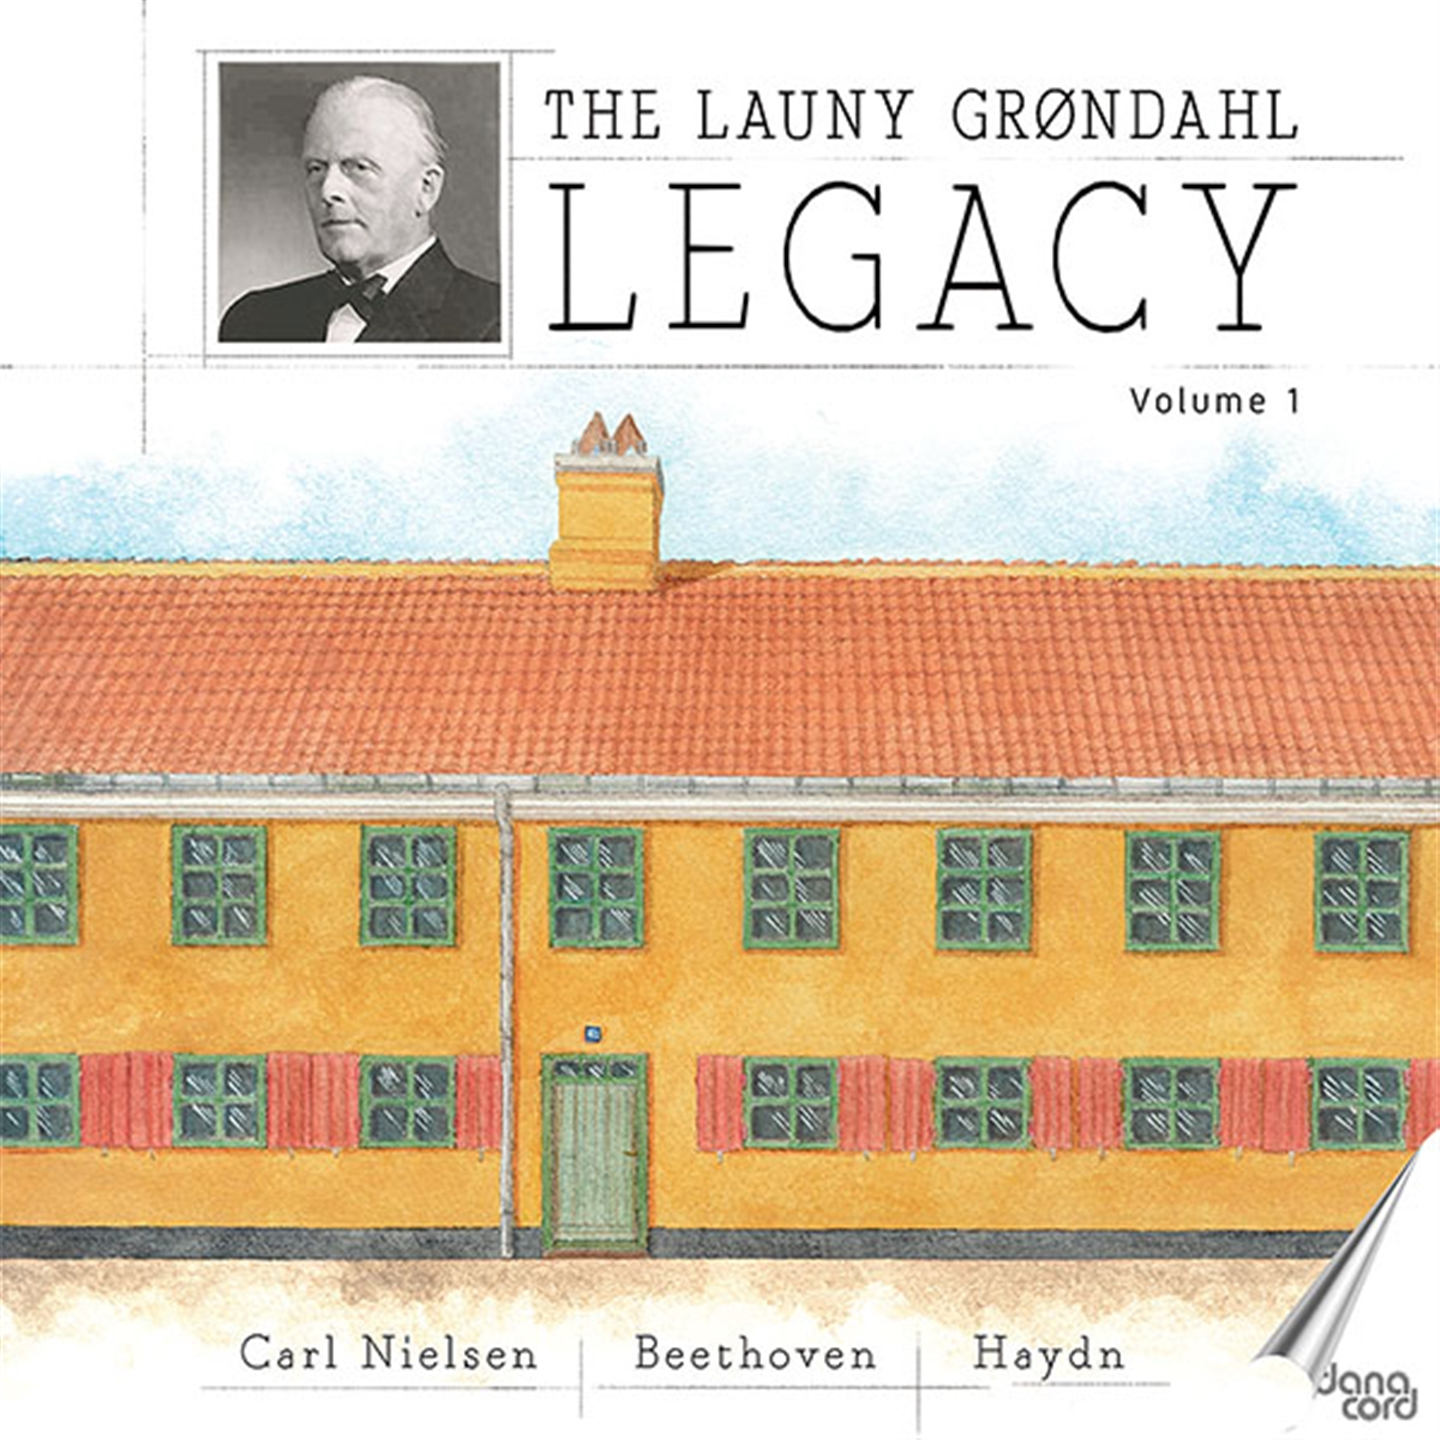 Drso, Launy Grondahl - The Launy Grondahl Legacy Vol.1 - Bild 1 von 1